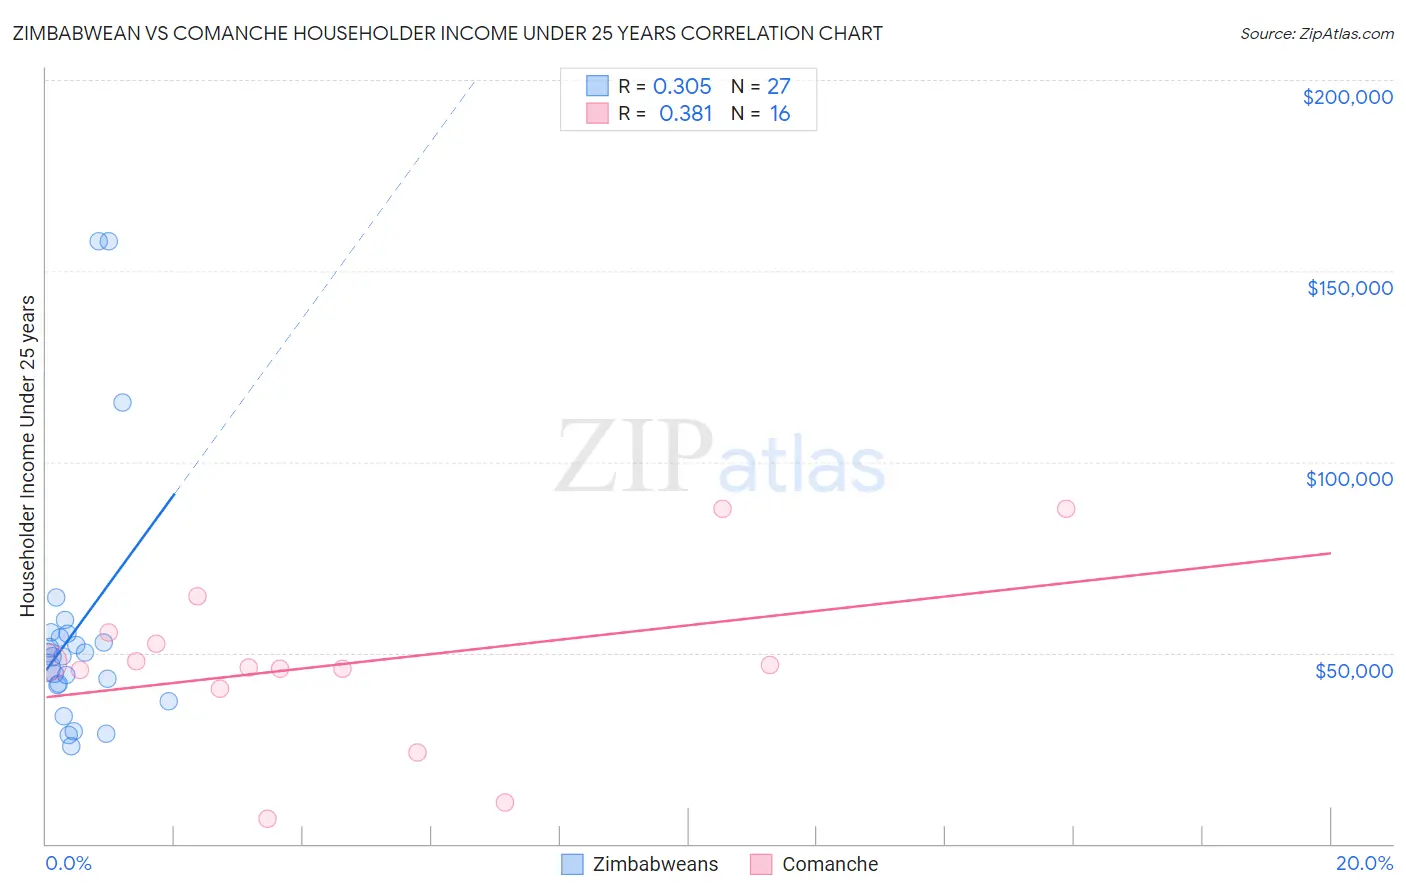 Zimbabwean vs Comanche Householder Income Under 25 years